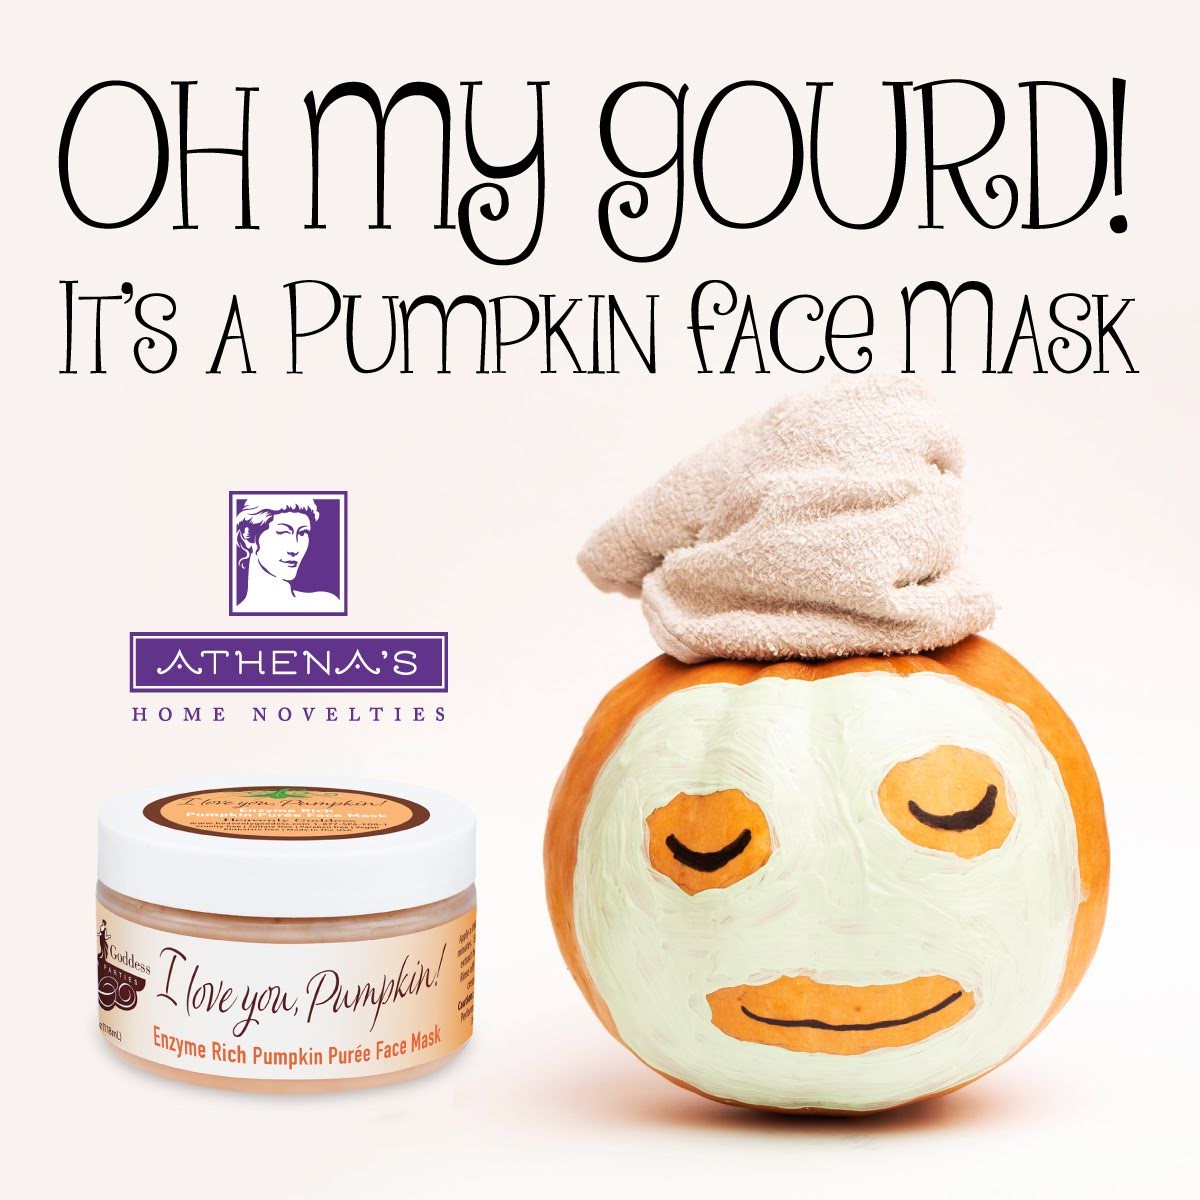 Enzyme Rich Pumpkin Puree Face Mask